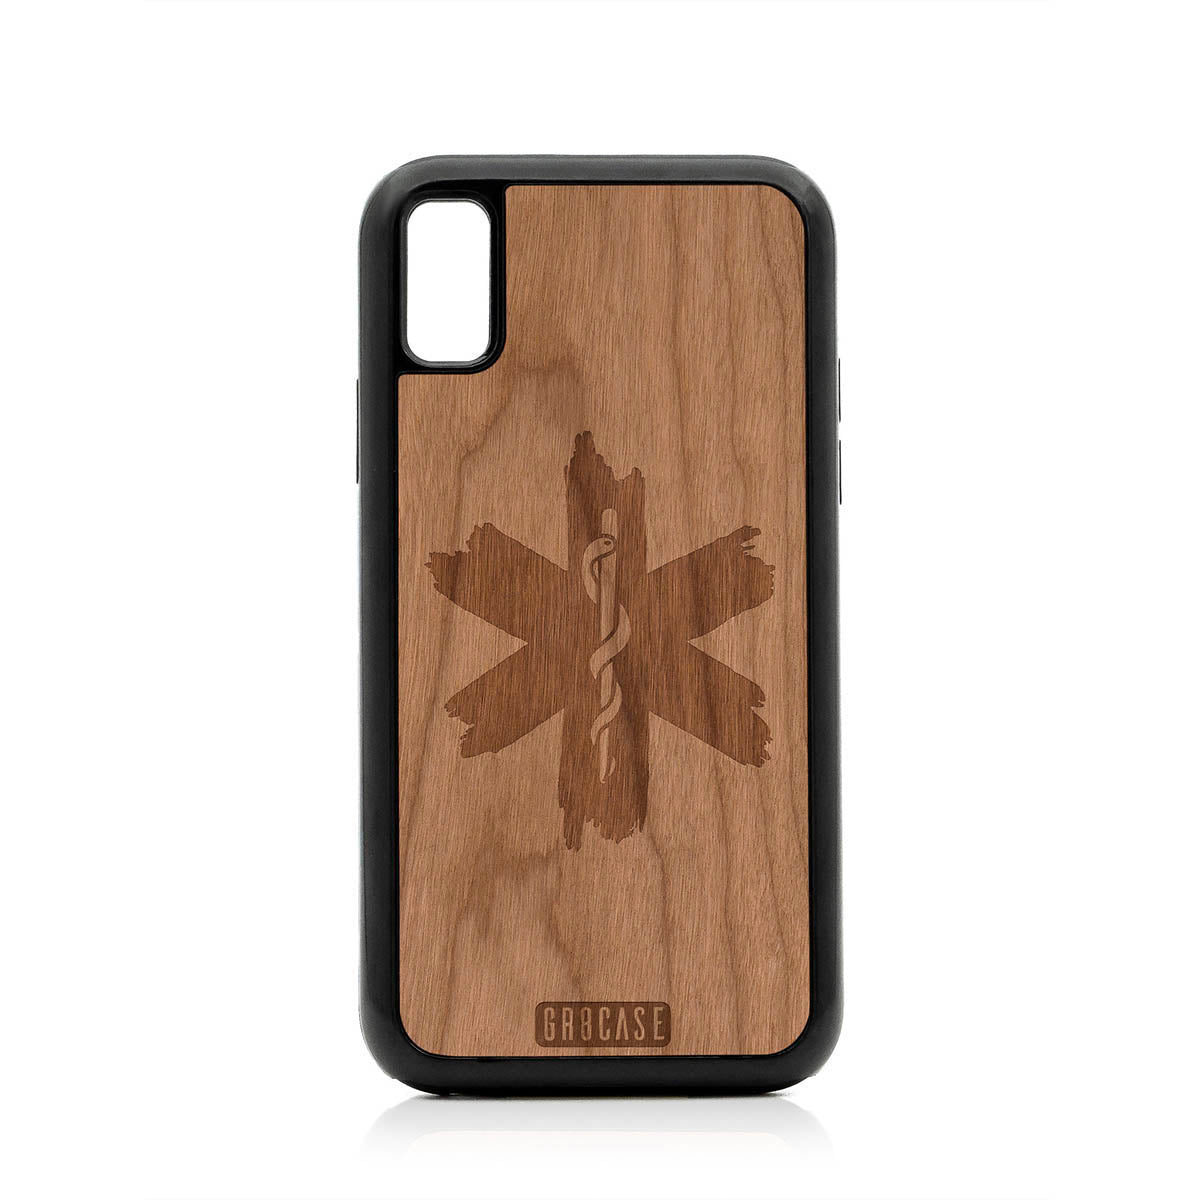 EMT Design Wood Case For iPhone XS Max by GR8CASE